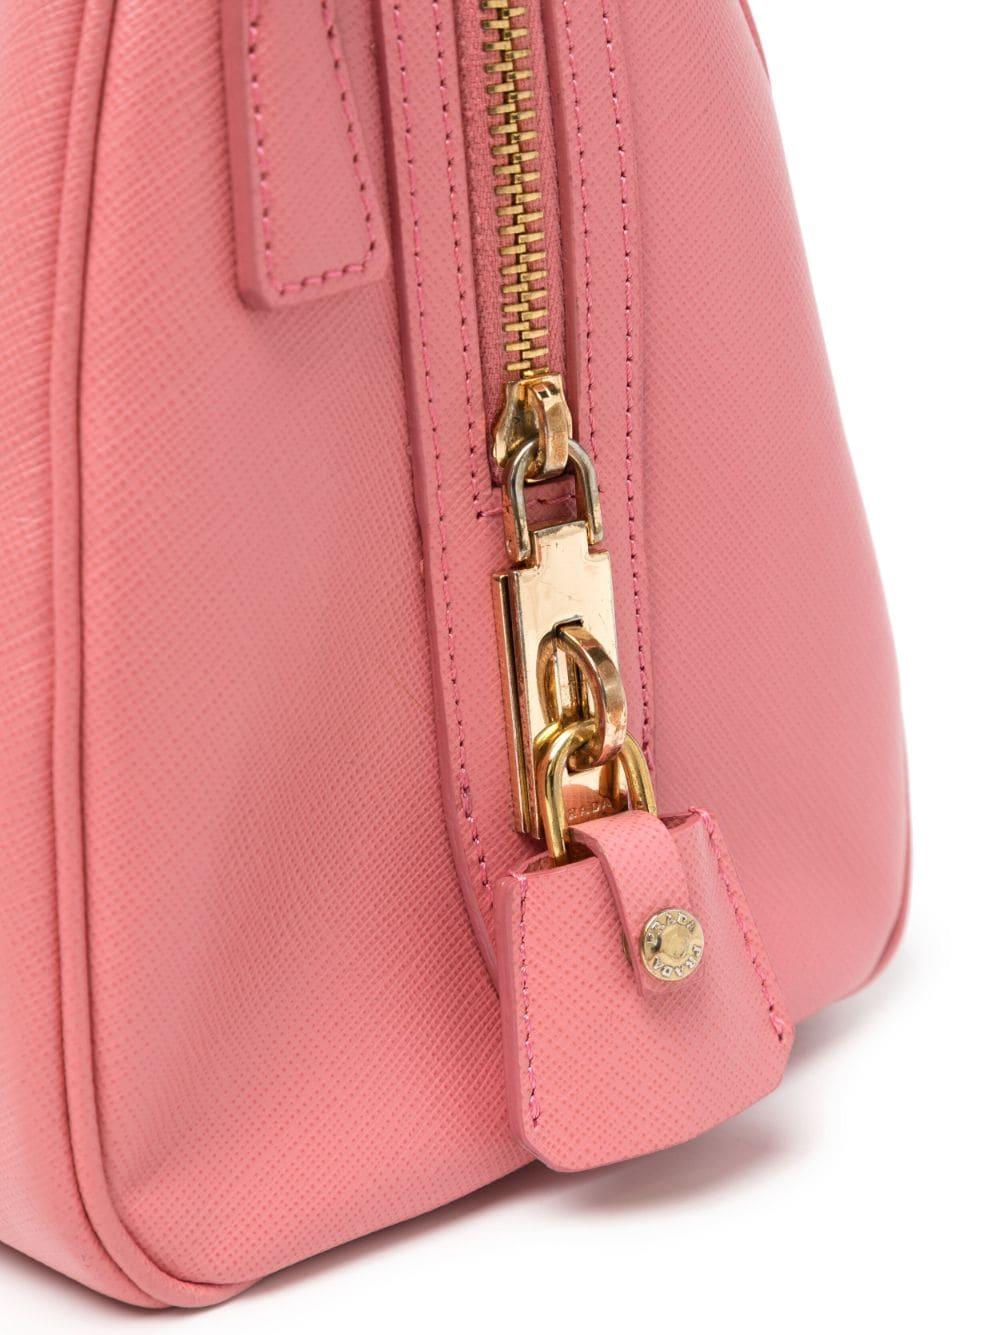 Prada Promenade Pink Leather Handbag In Good Condition In London, GB